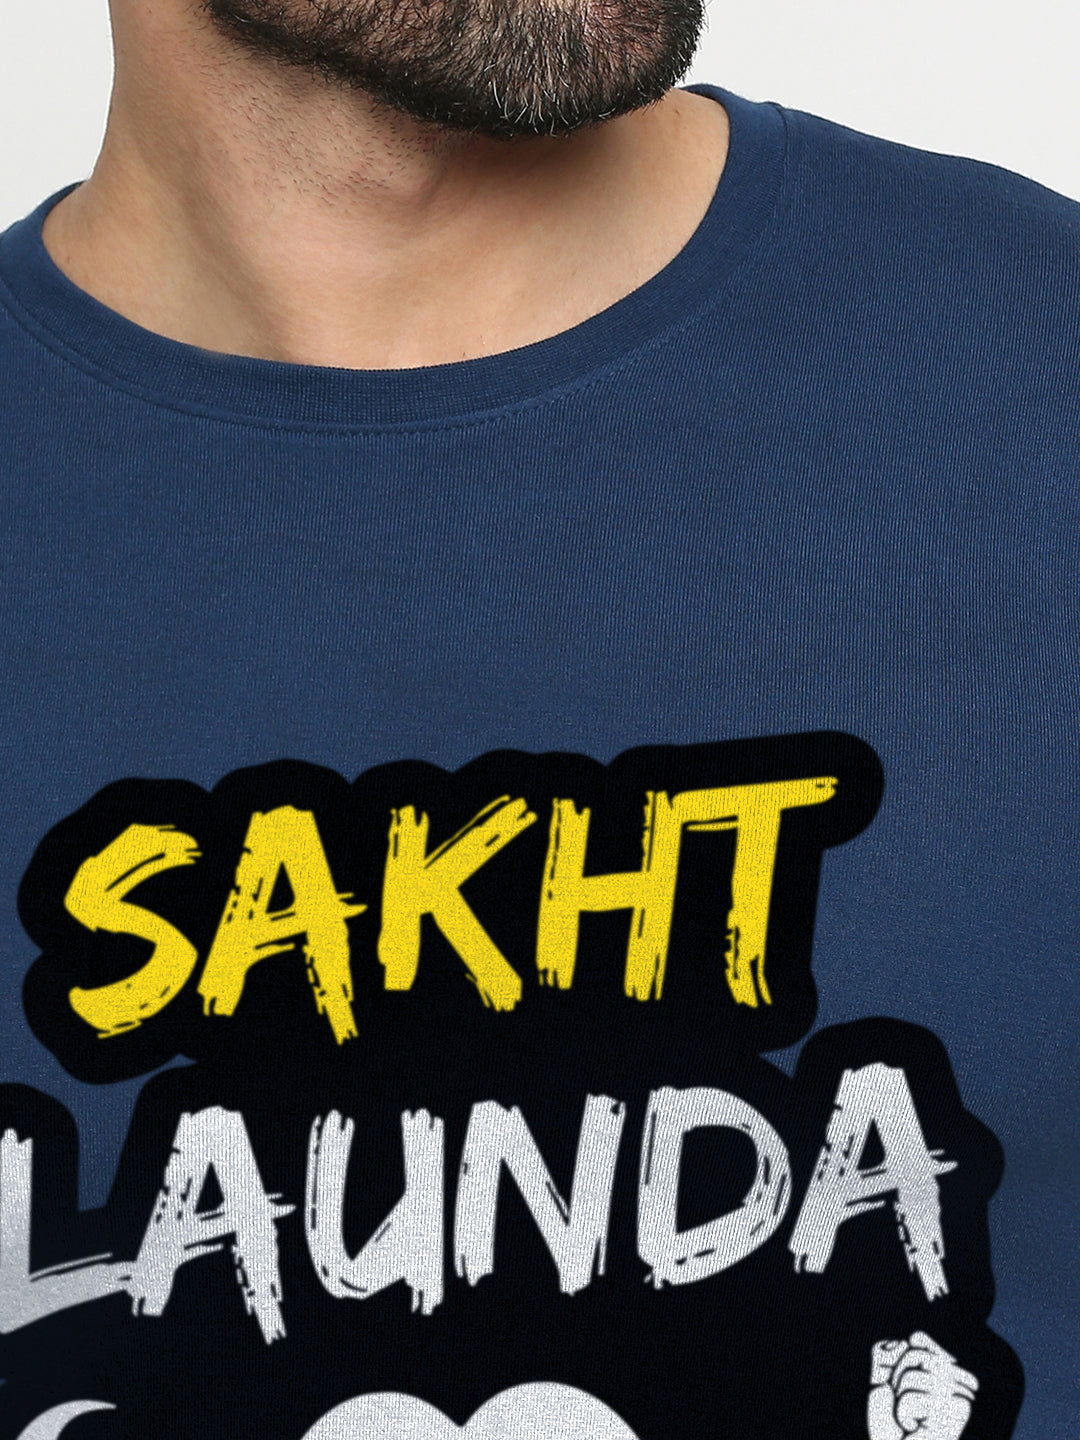 Sakht Launda Funny T-Shirt